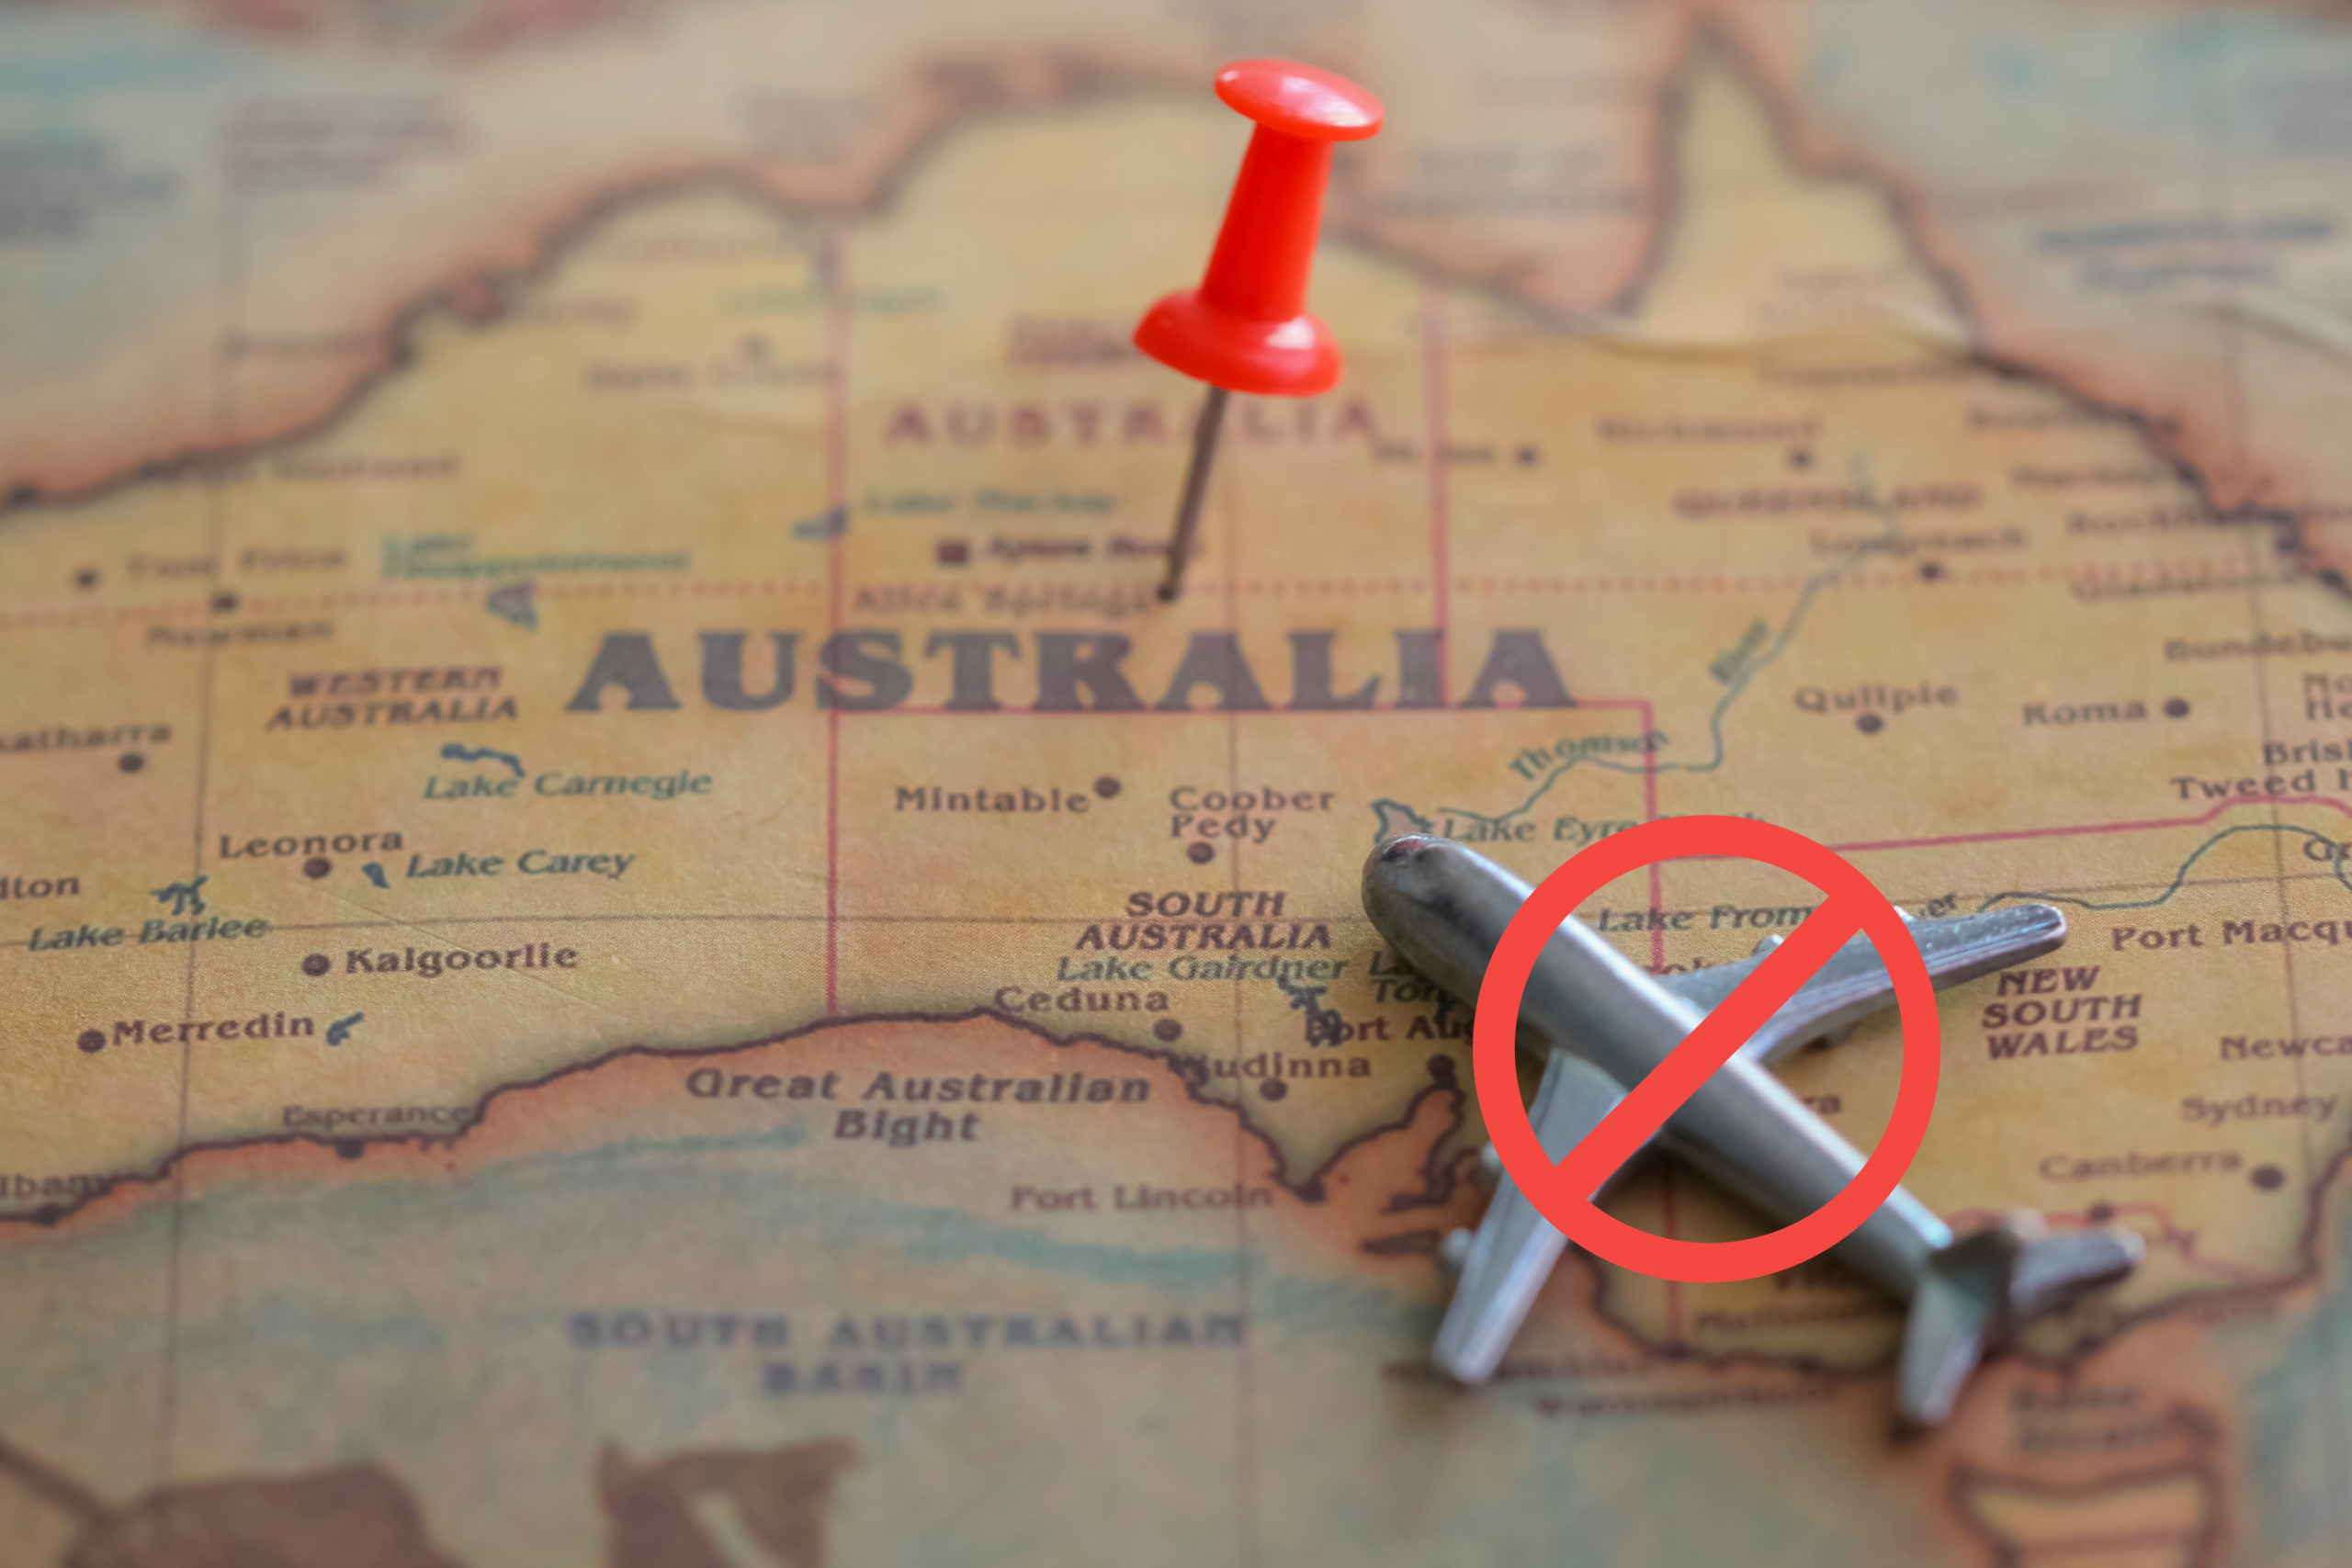 travel restrictions australia